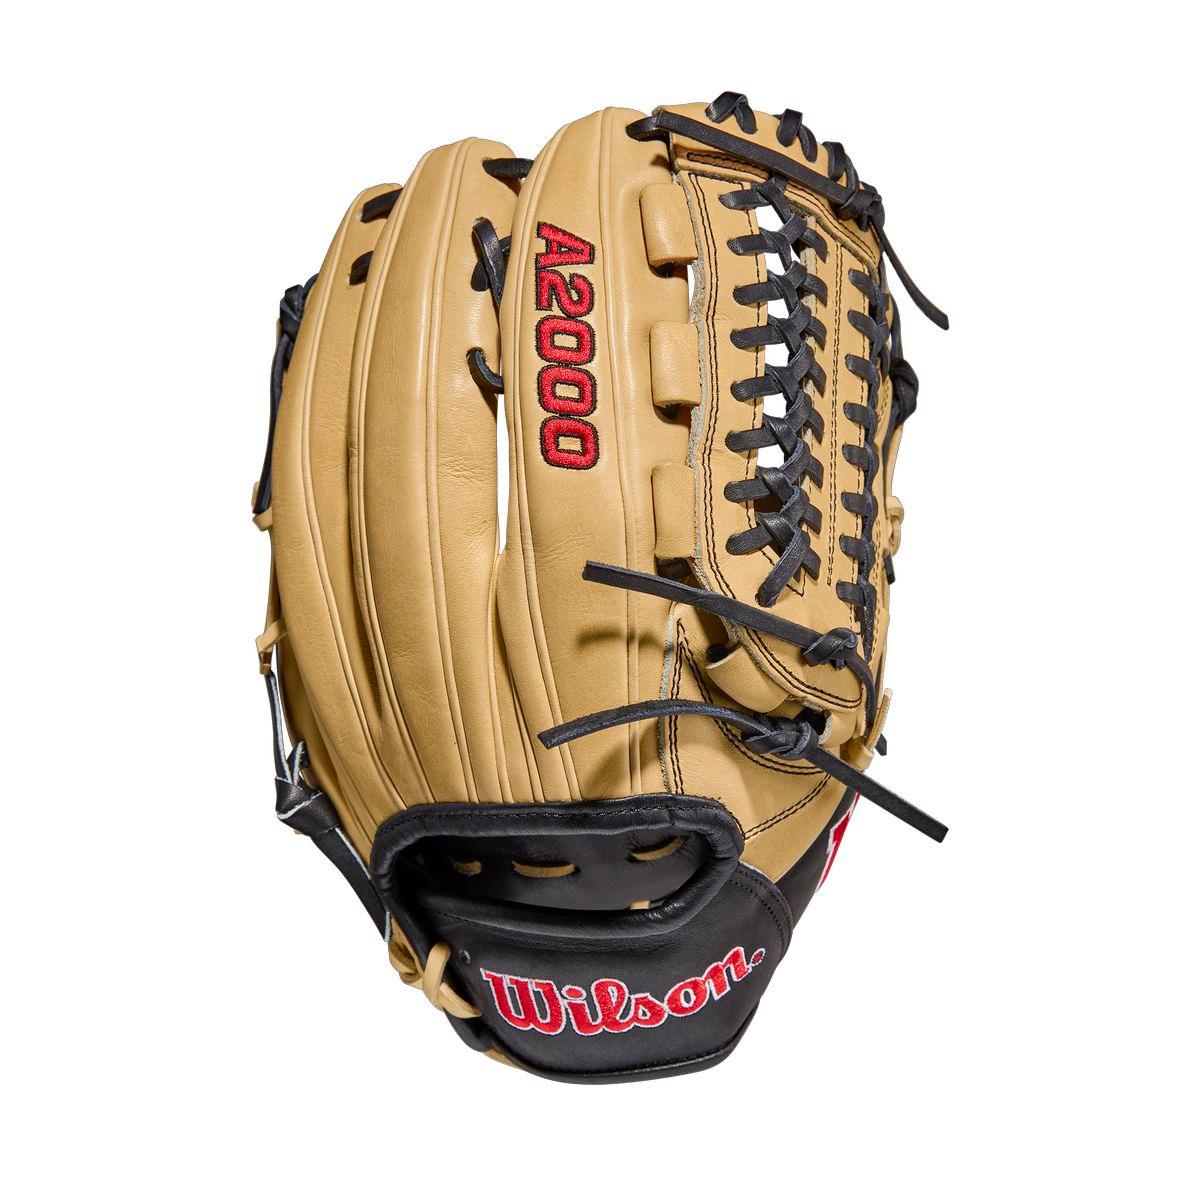 A2000 D33 11.75" Senior Baseball Glove - Sports Excellence